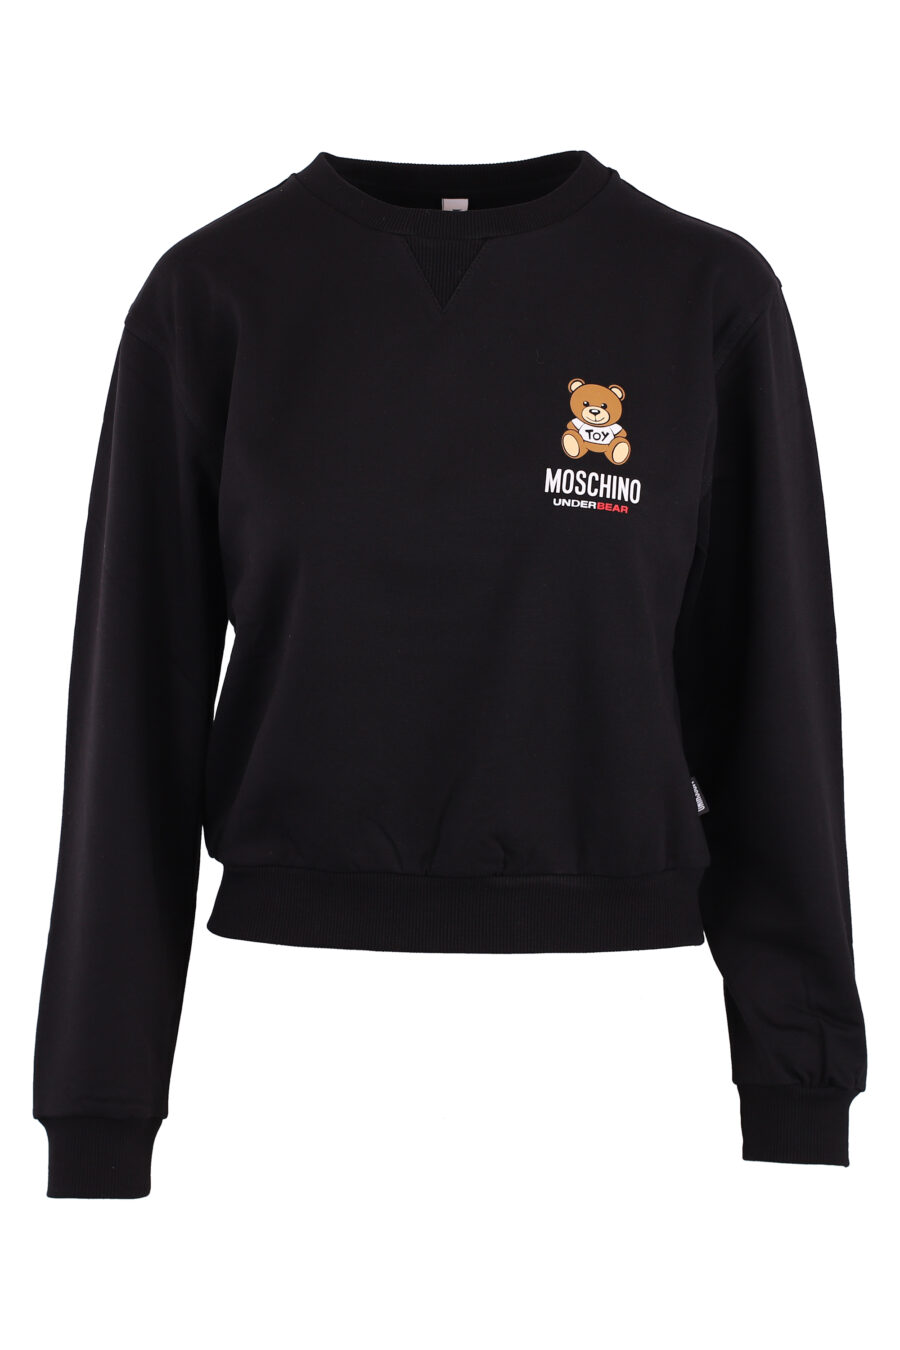 Black sweatshirt with small bear logo - IMG 6186